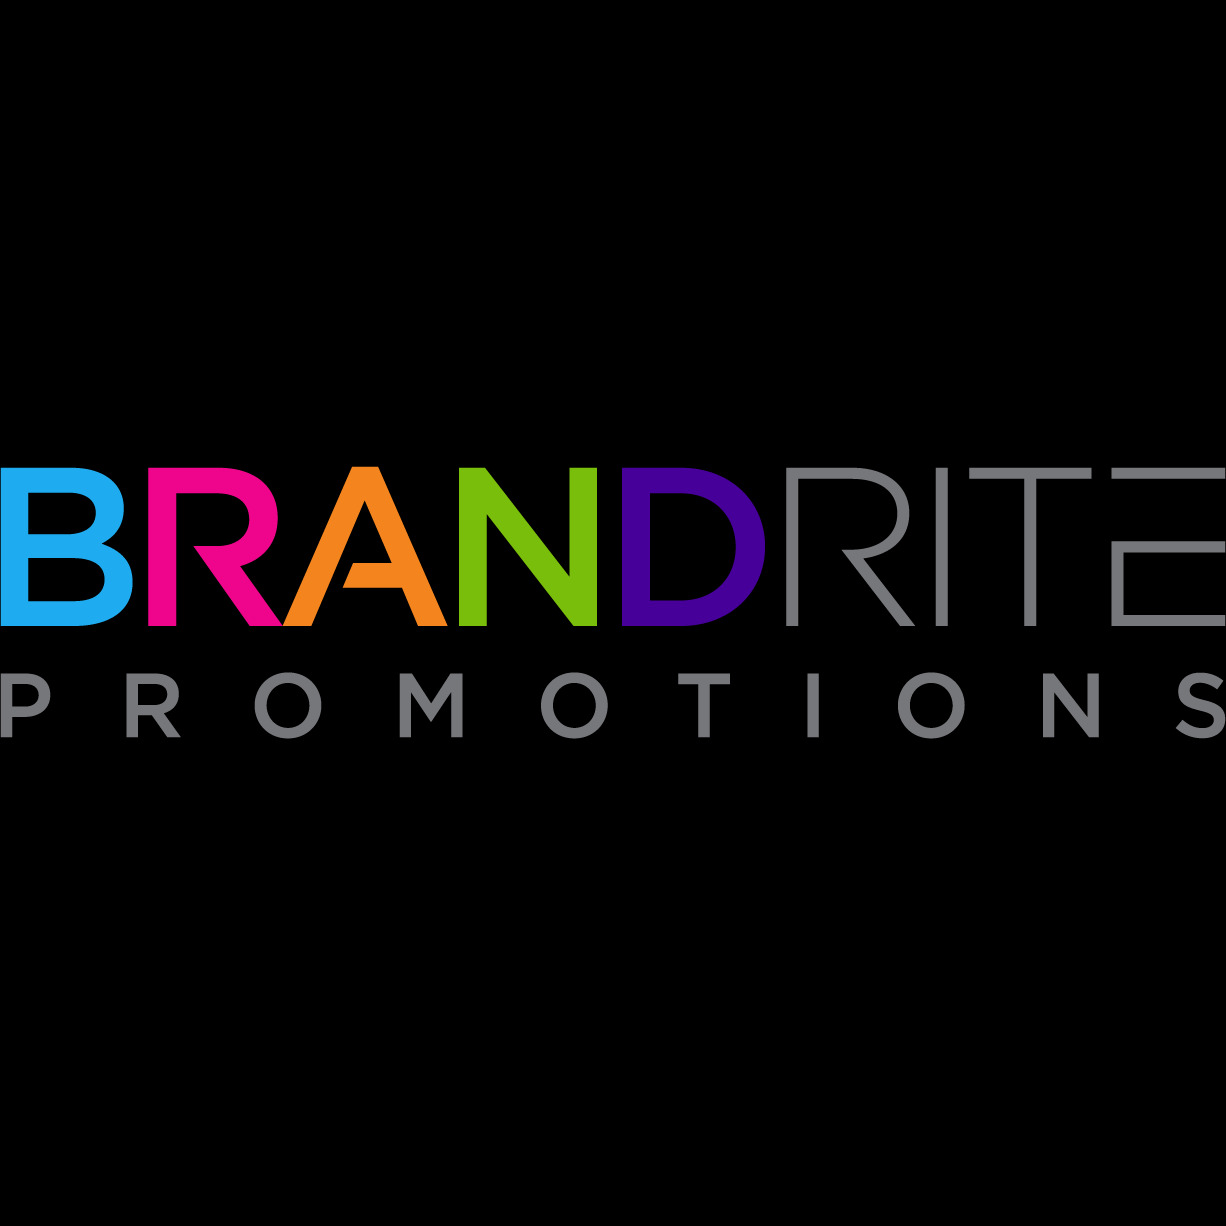 Brandrite Promotions Perth